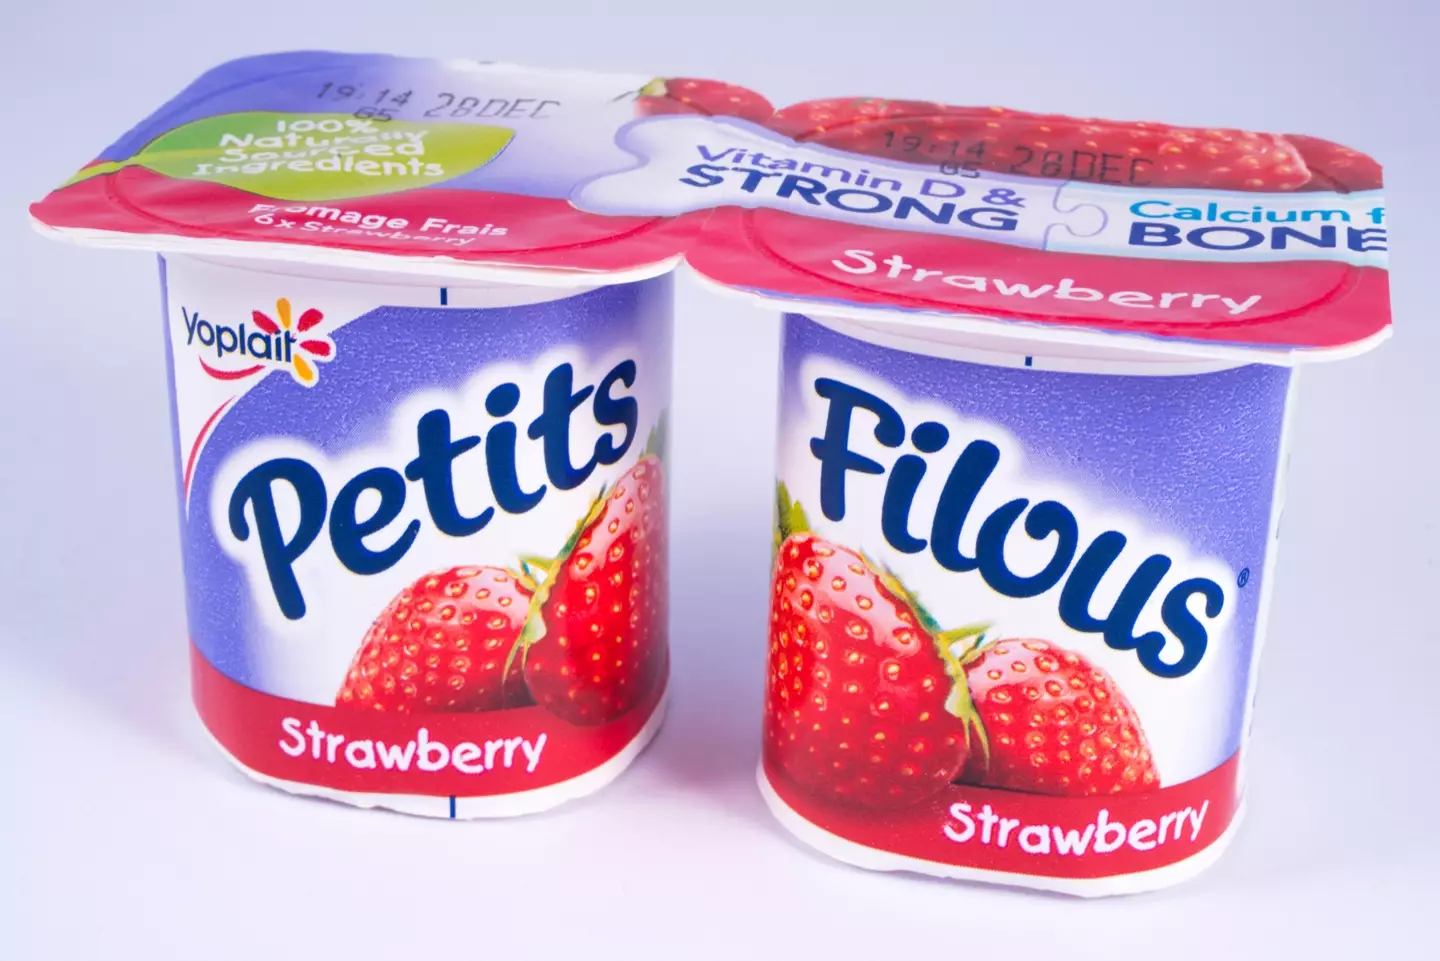 Did you know Petit Filous isn't yoghurt? (